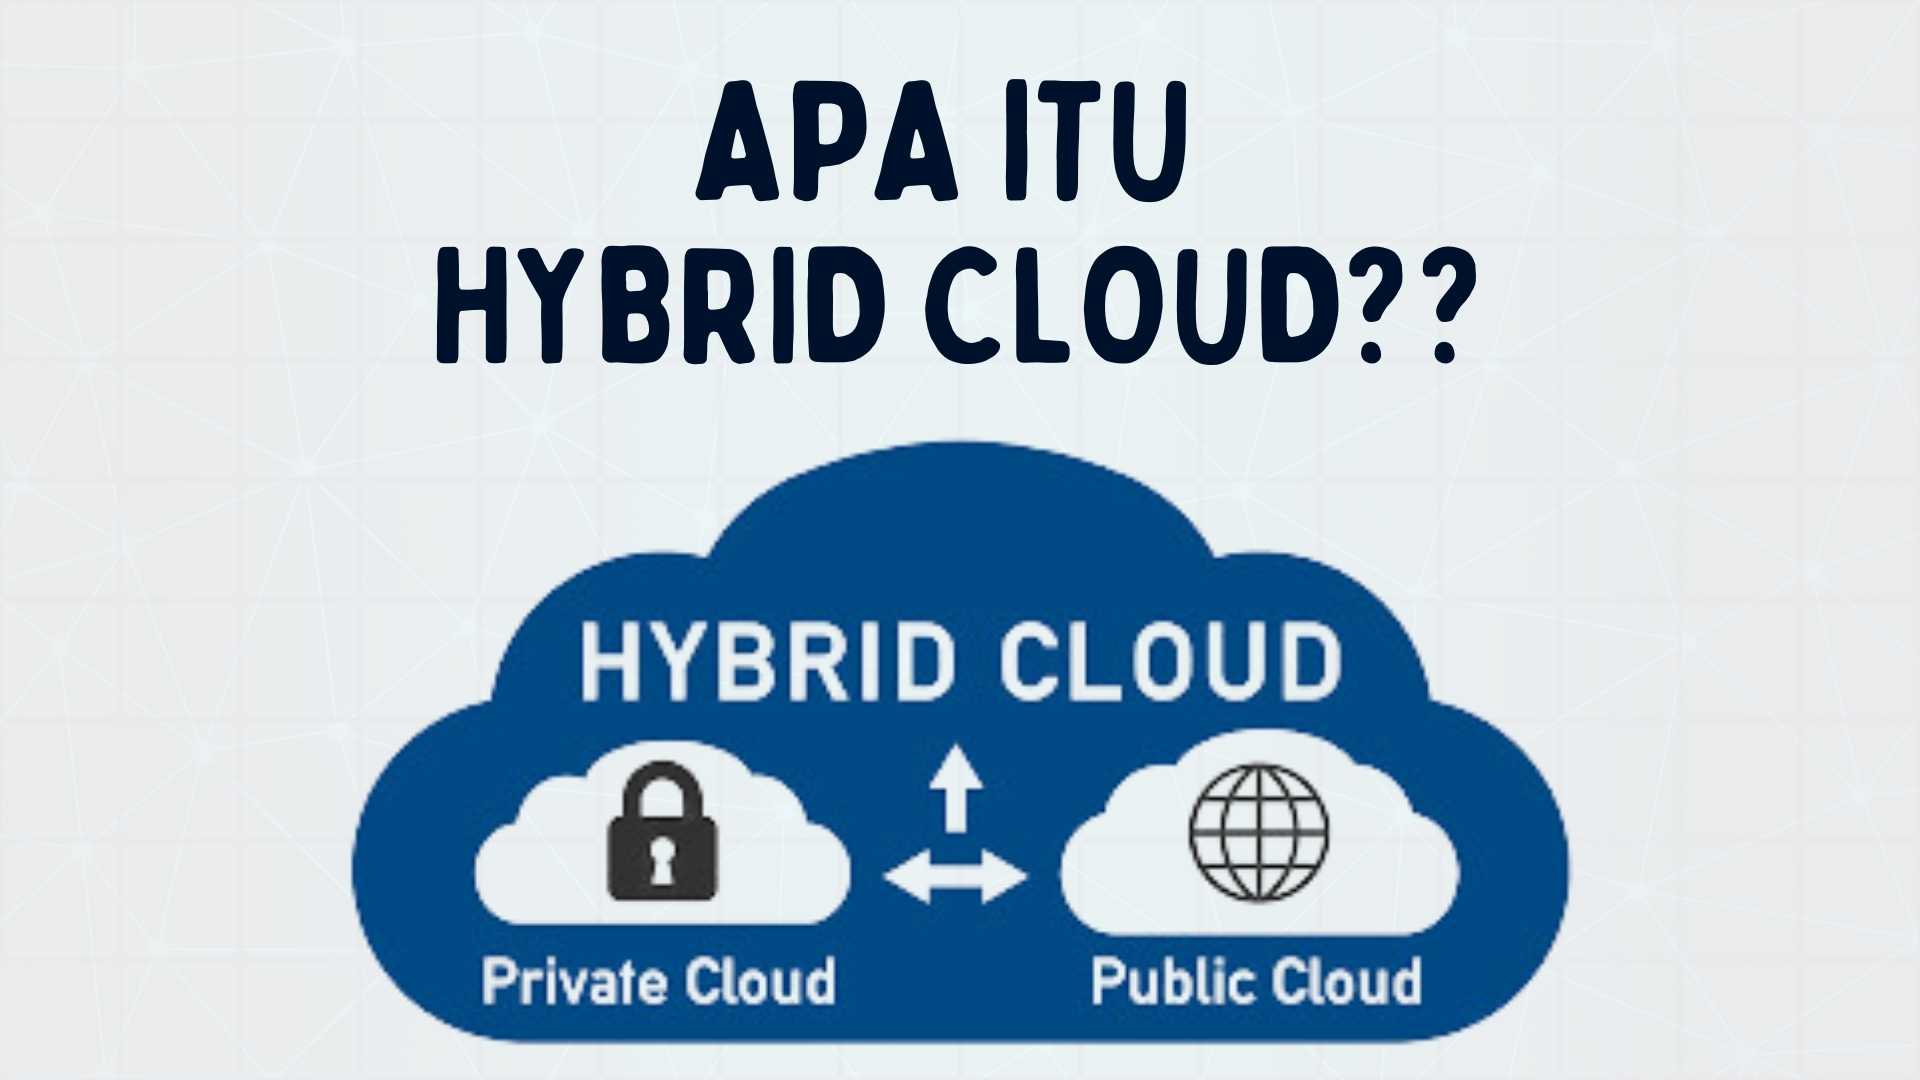 apa itu hybrid cloud